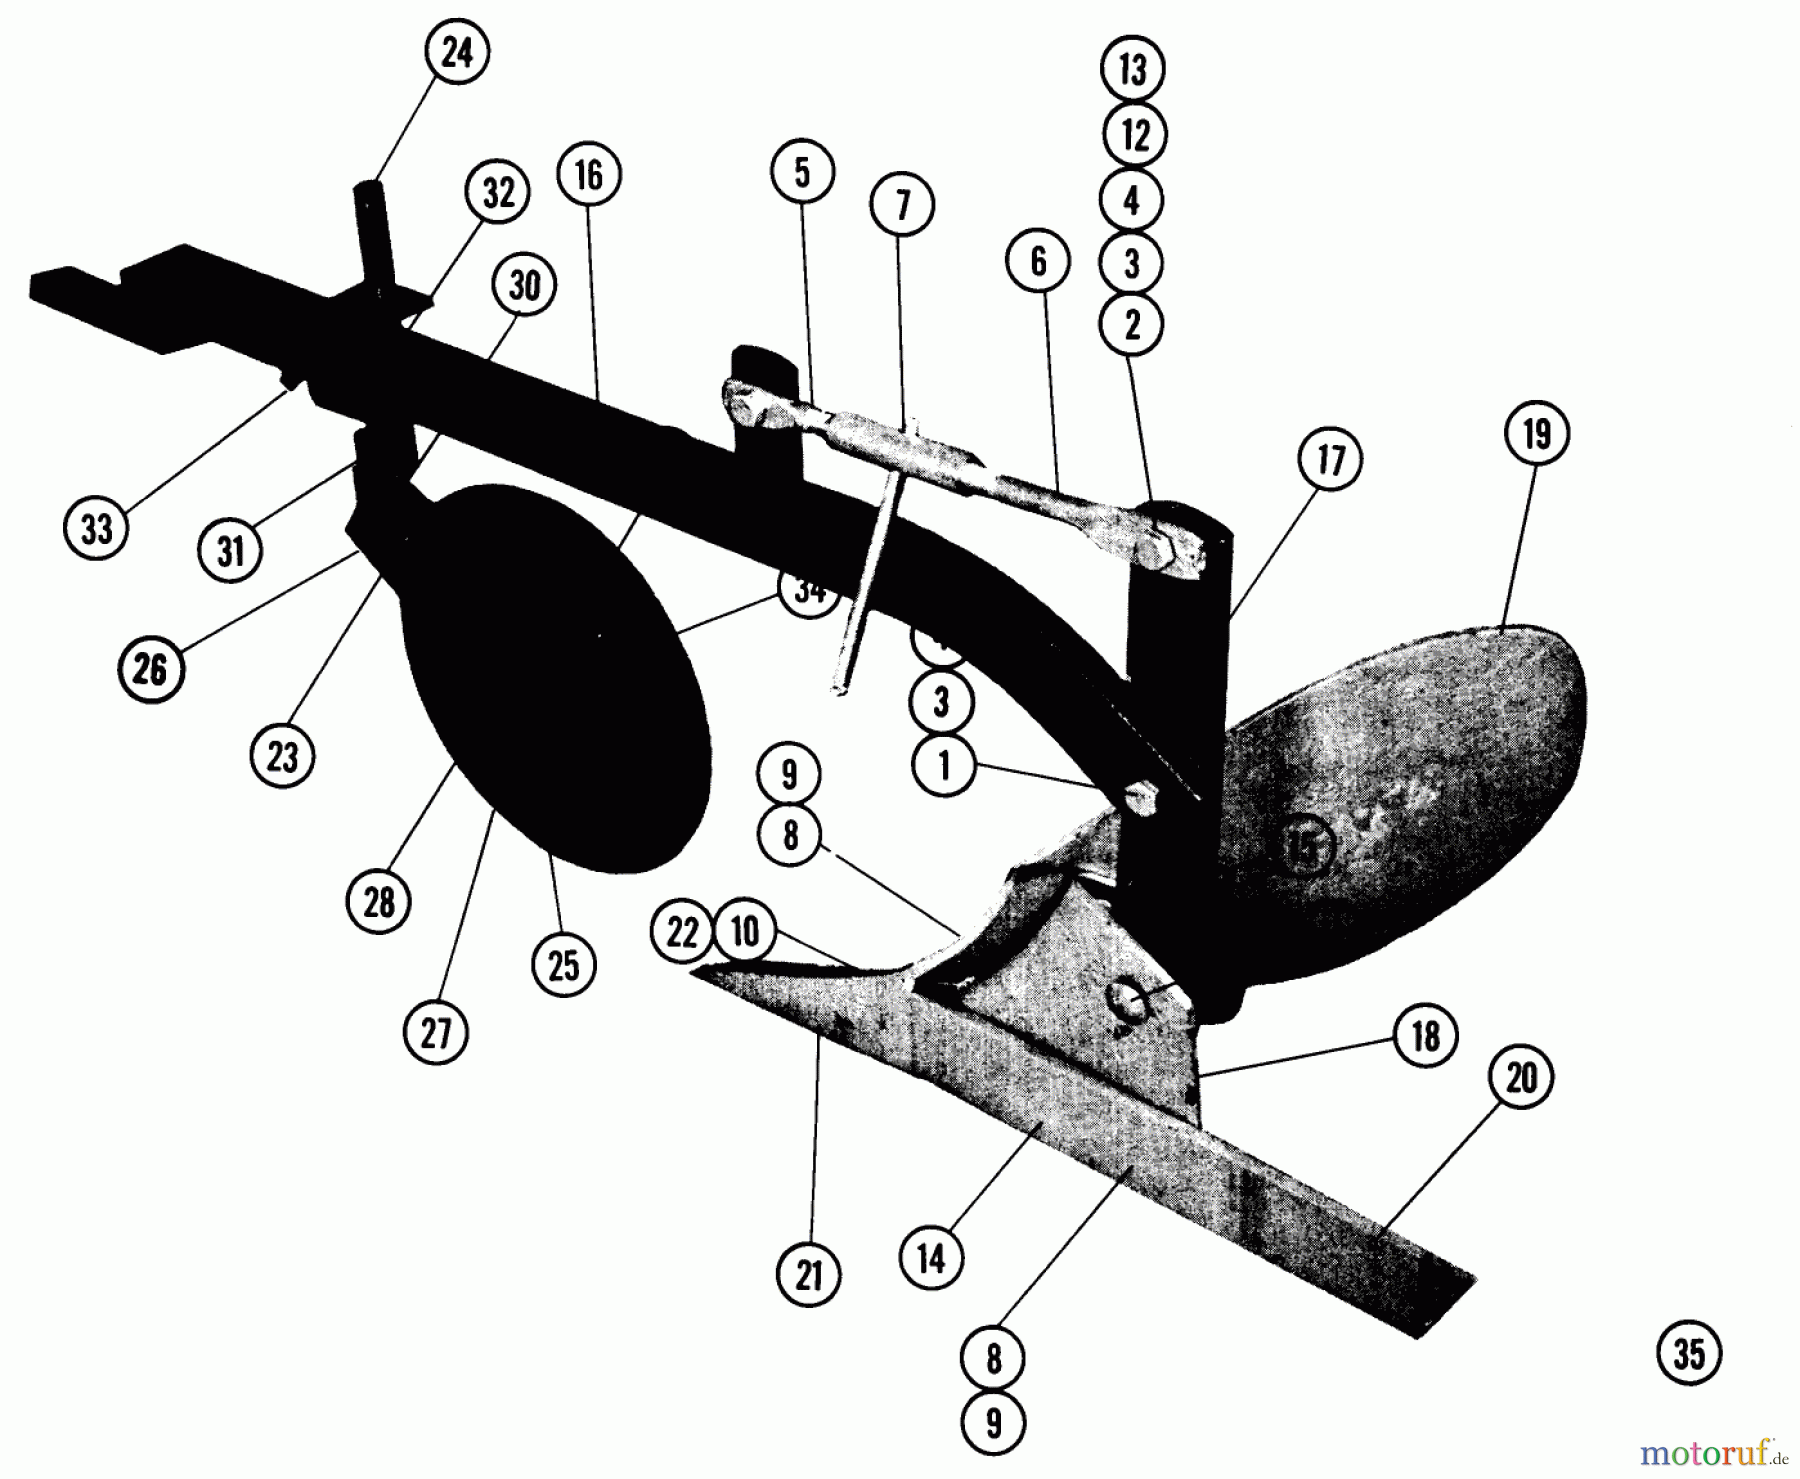  Toro Neu Accessories SC-15 - Toro Aerator, 1960 PARTS LIST FOR PP-8-A PLOW